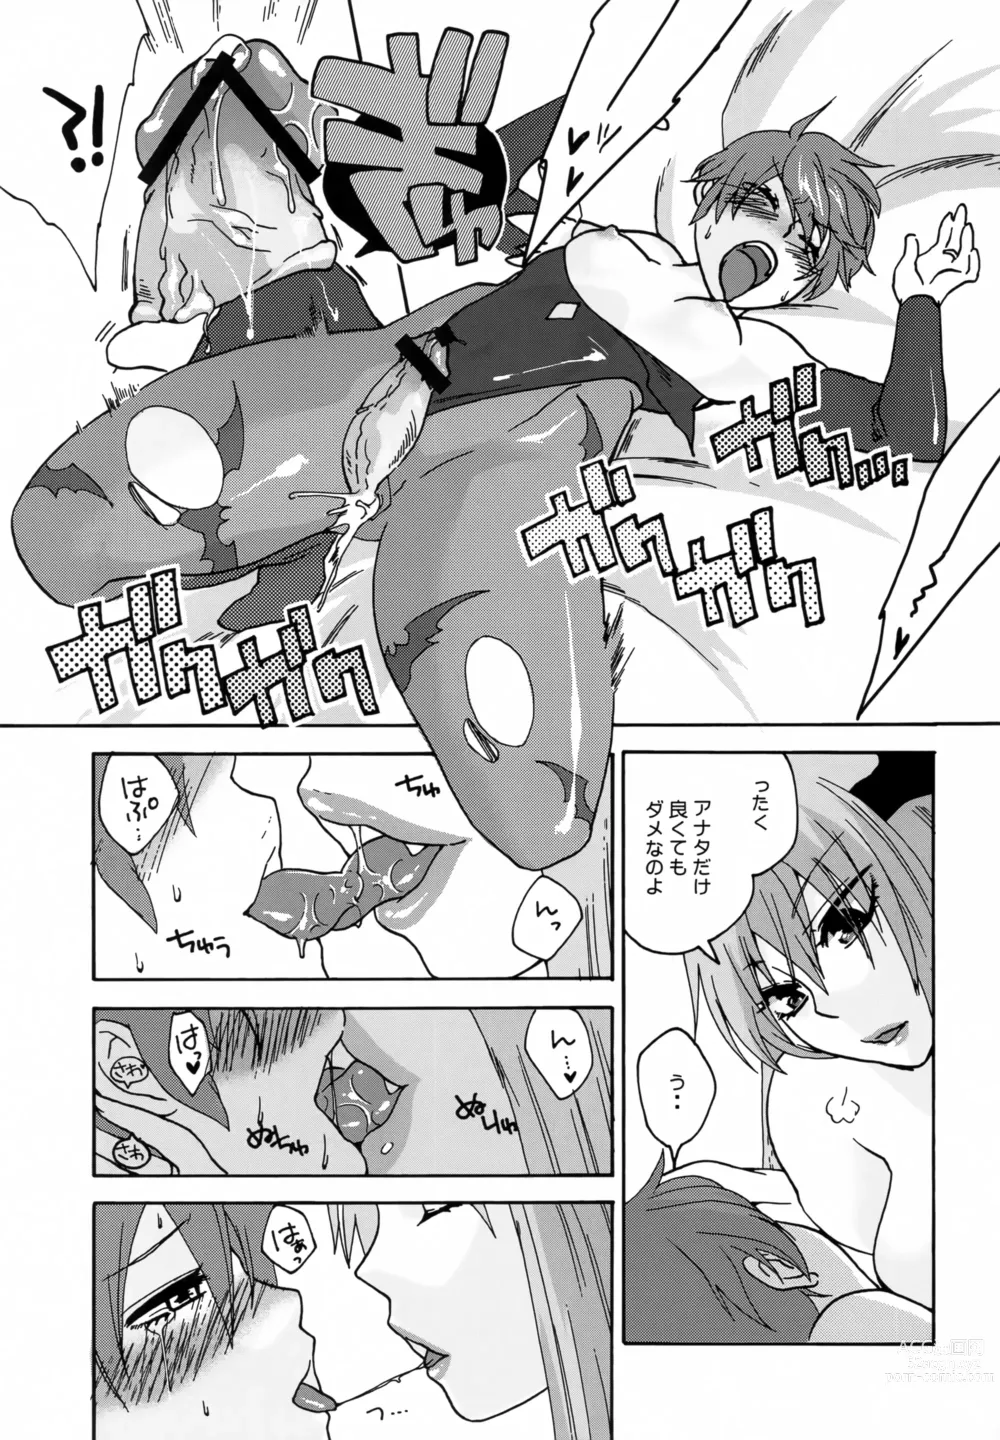 Page 22 of doujinshi regains